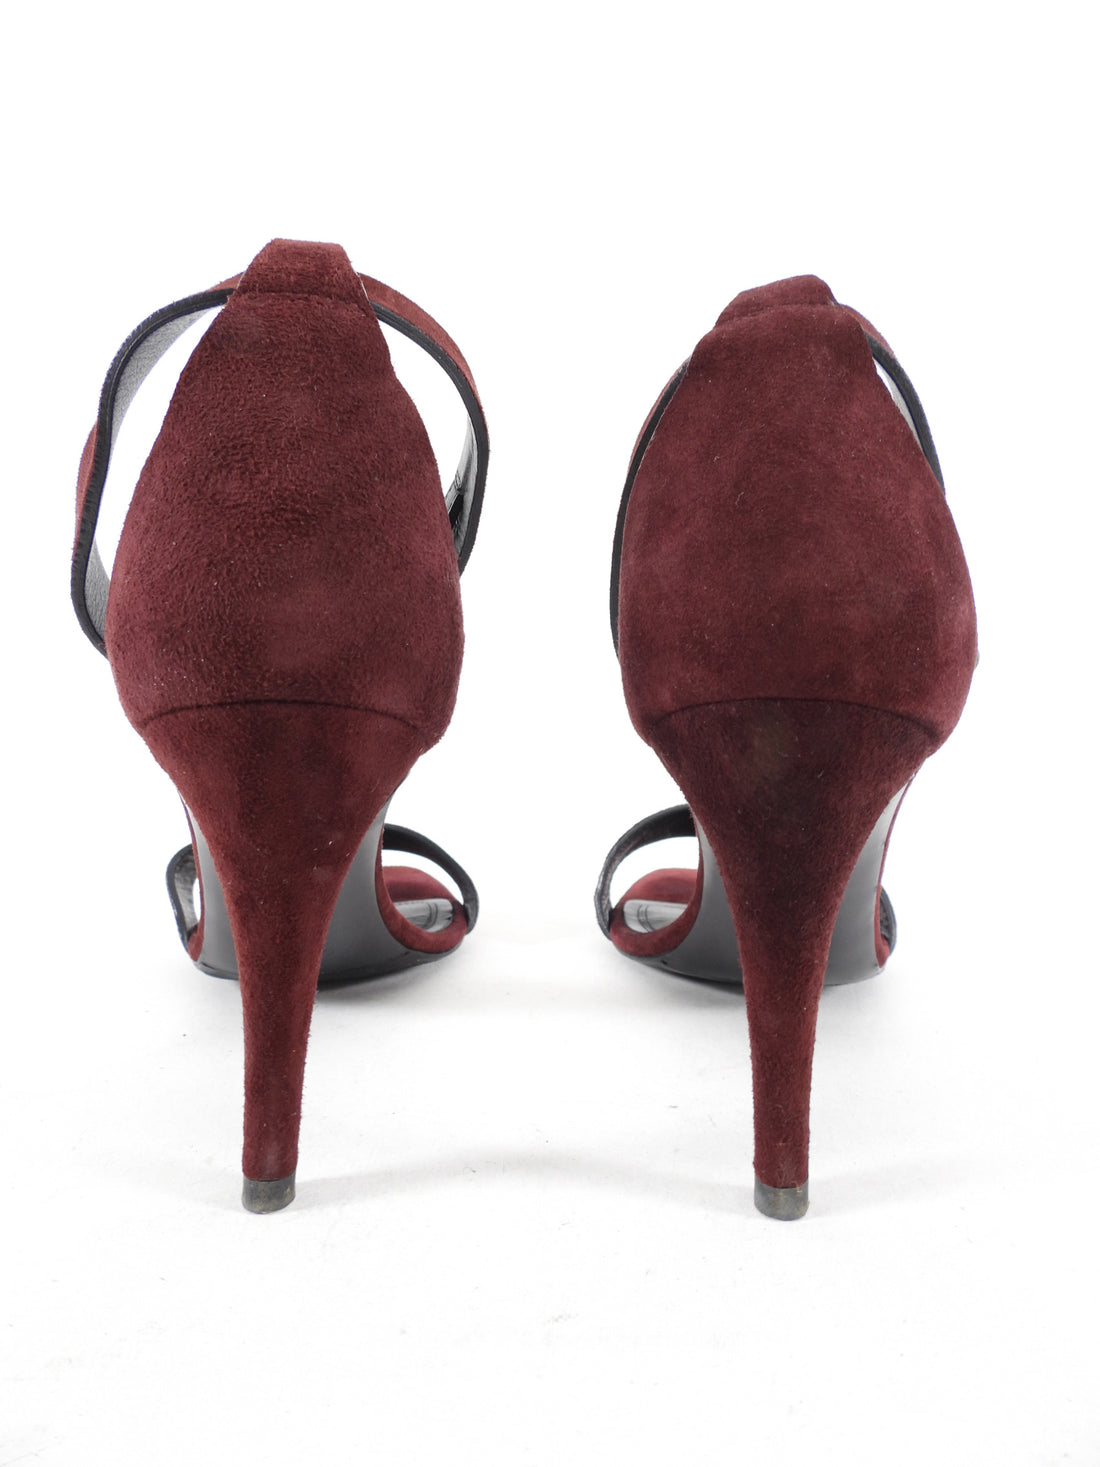 Celine Burgundy Suede High Heel Sandals - 39.5 (9.5)